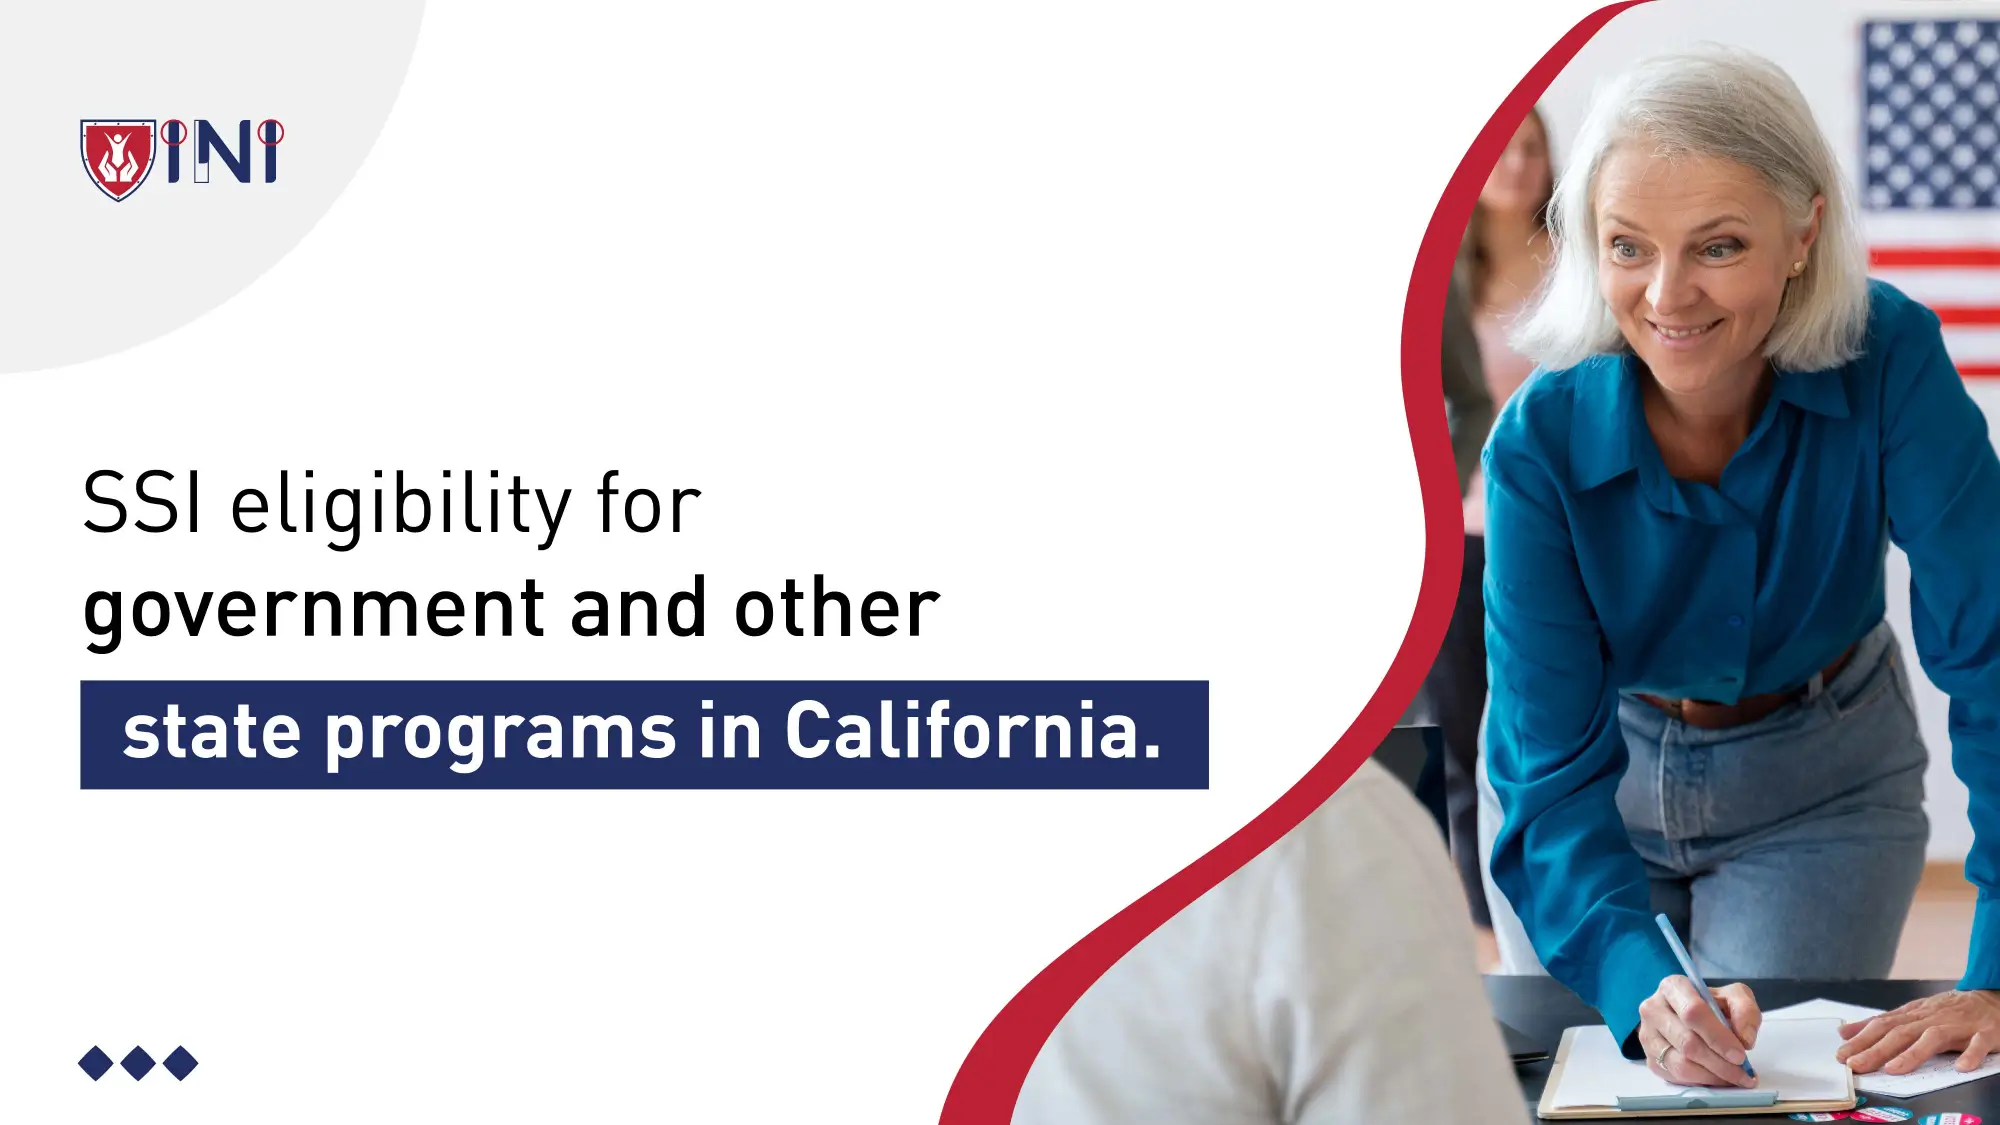 SSI eligibility for government programs in California